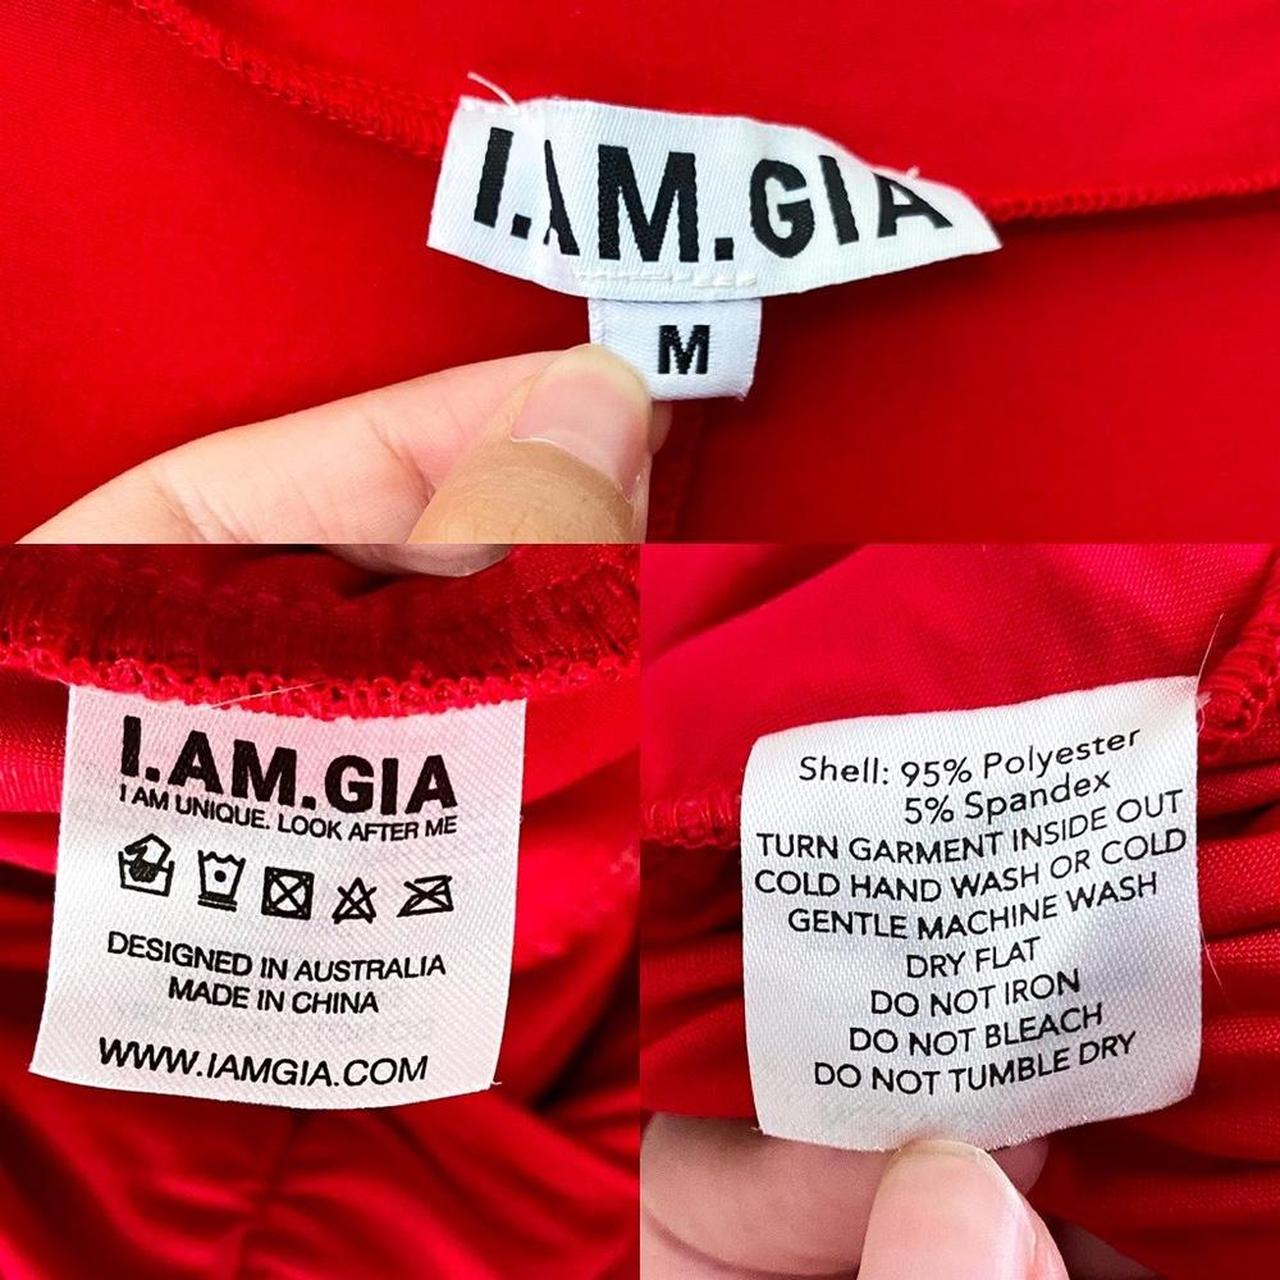 Product Image 2 - IAMGIA Estella Pant
Color Red
Size Medium
Excellent